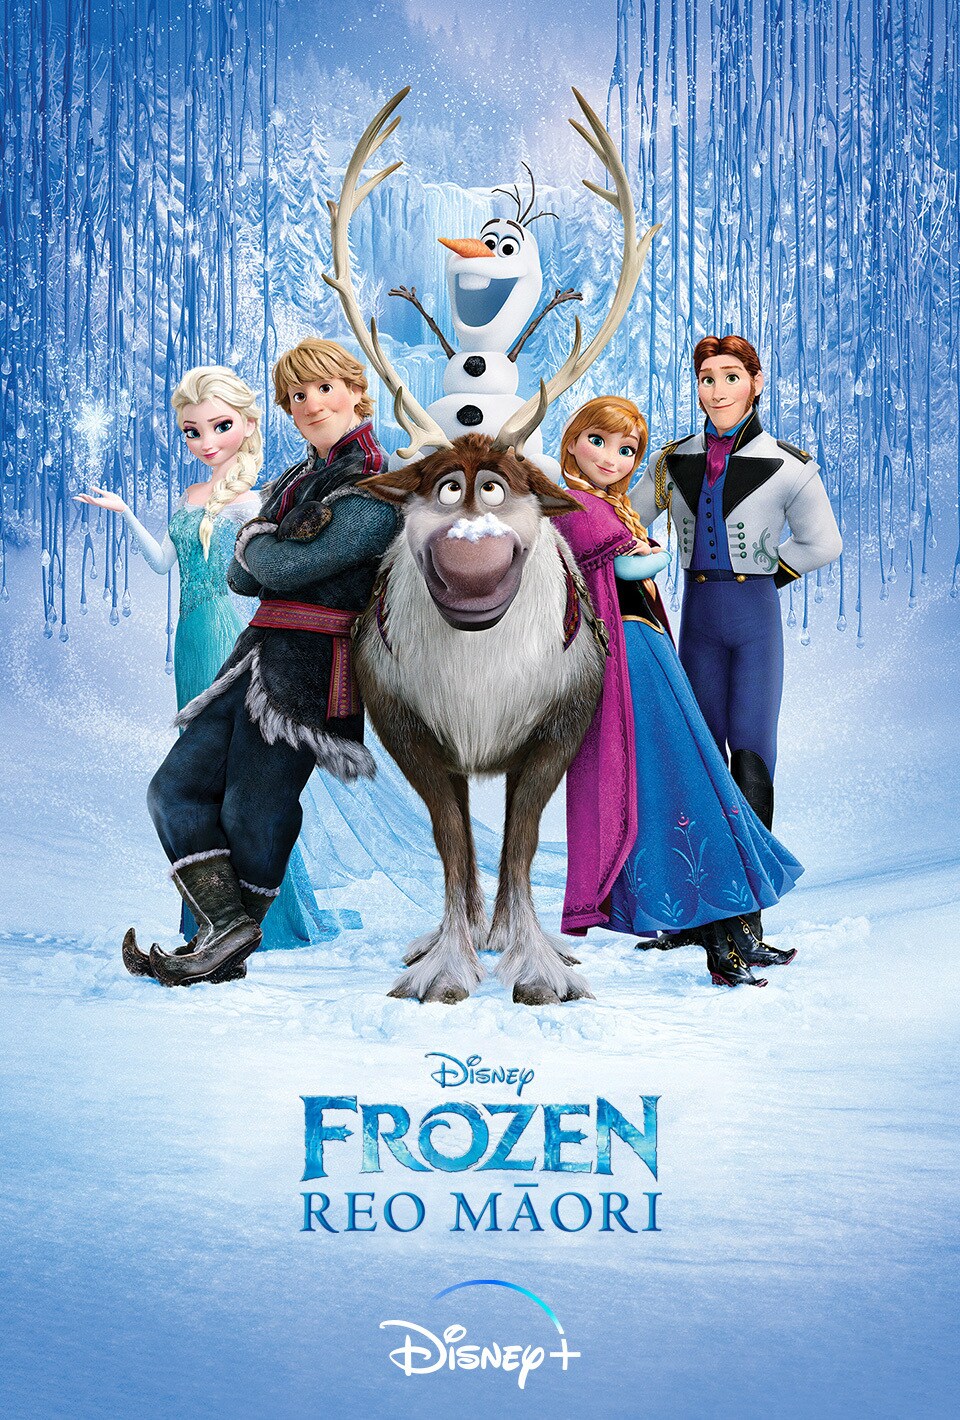 Disney's Frozen Reo Maori